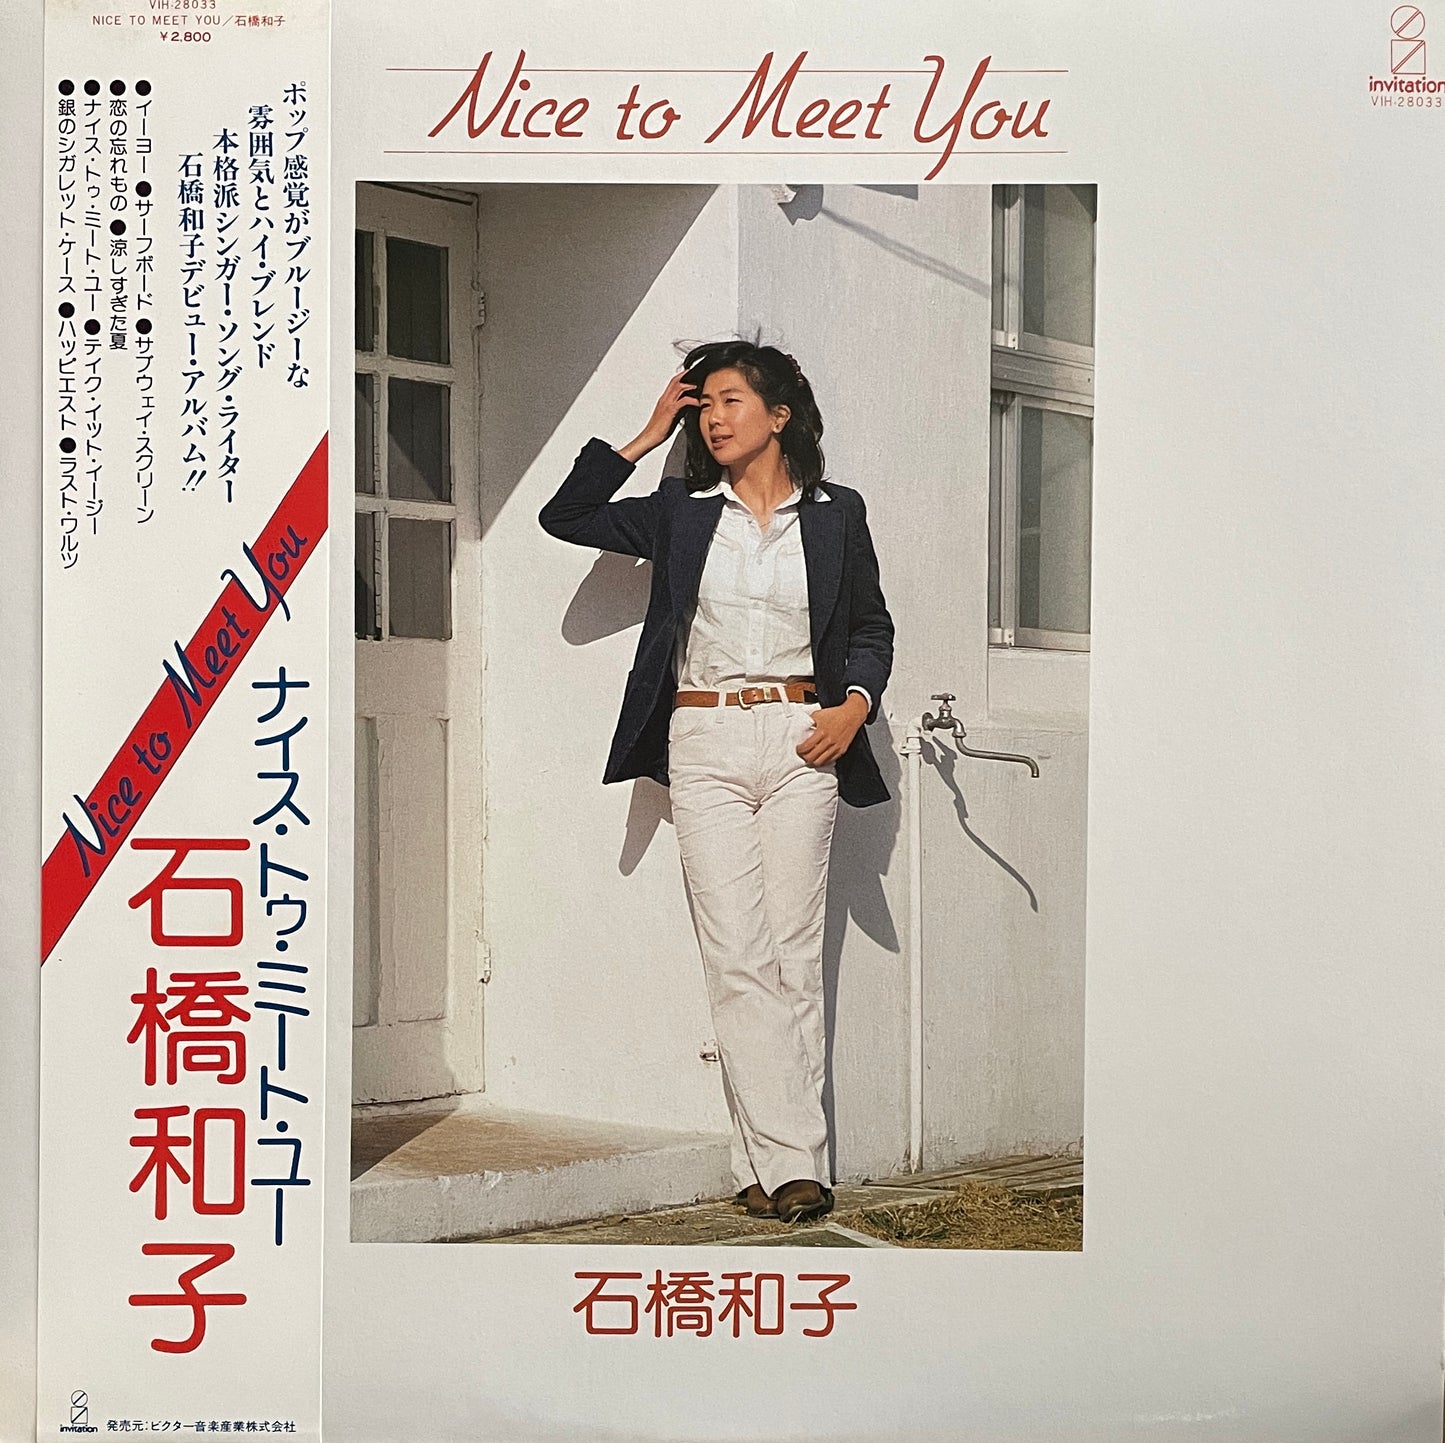 Kazuko Ishibashi "Nice To Meet You" (1981)